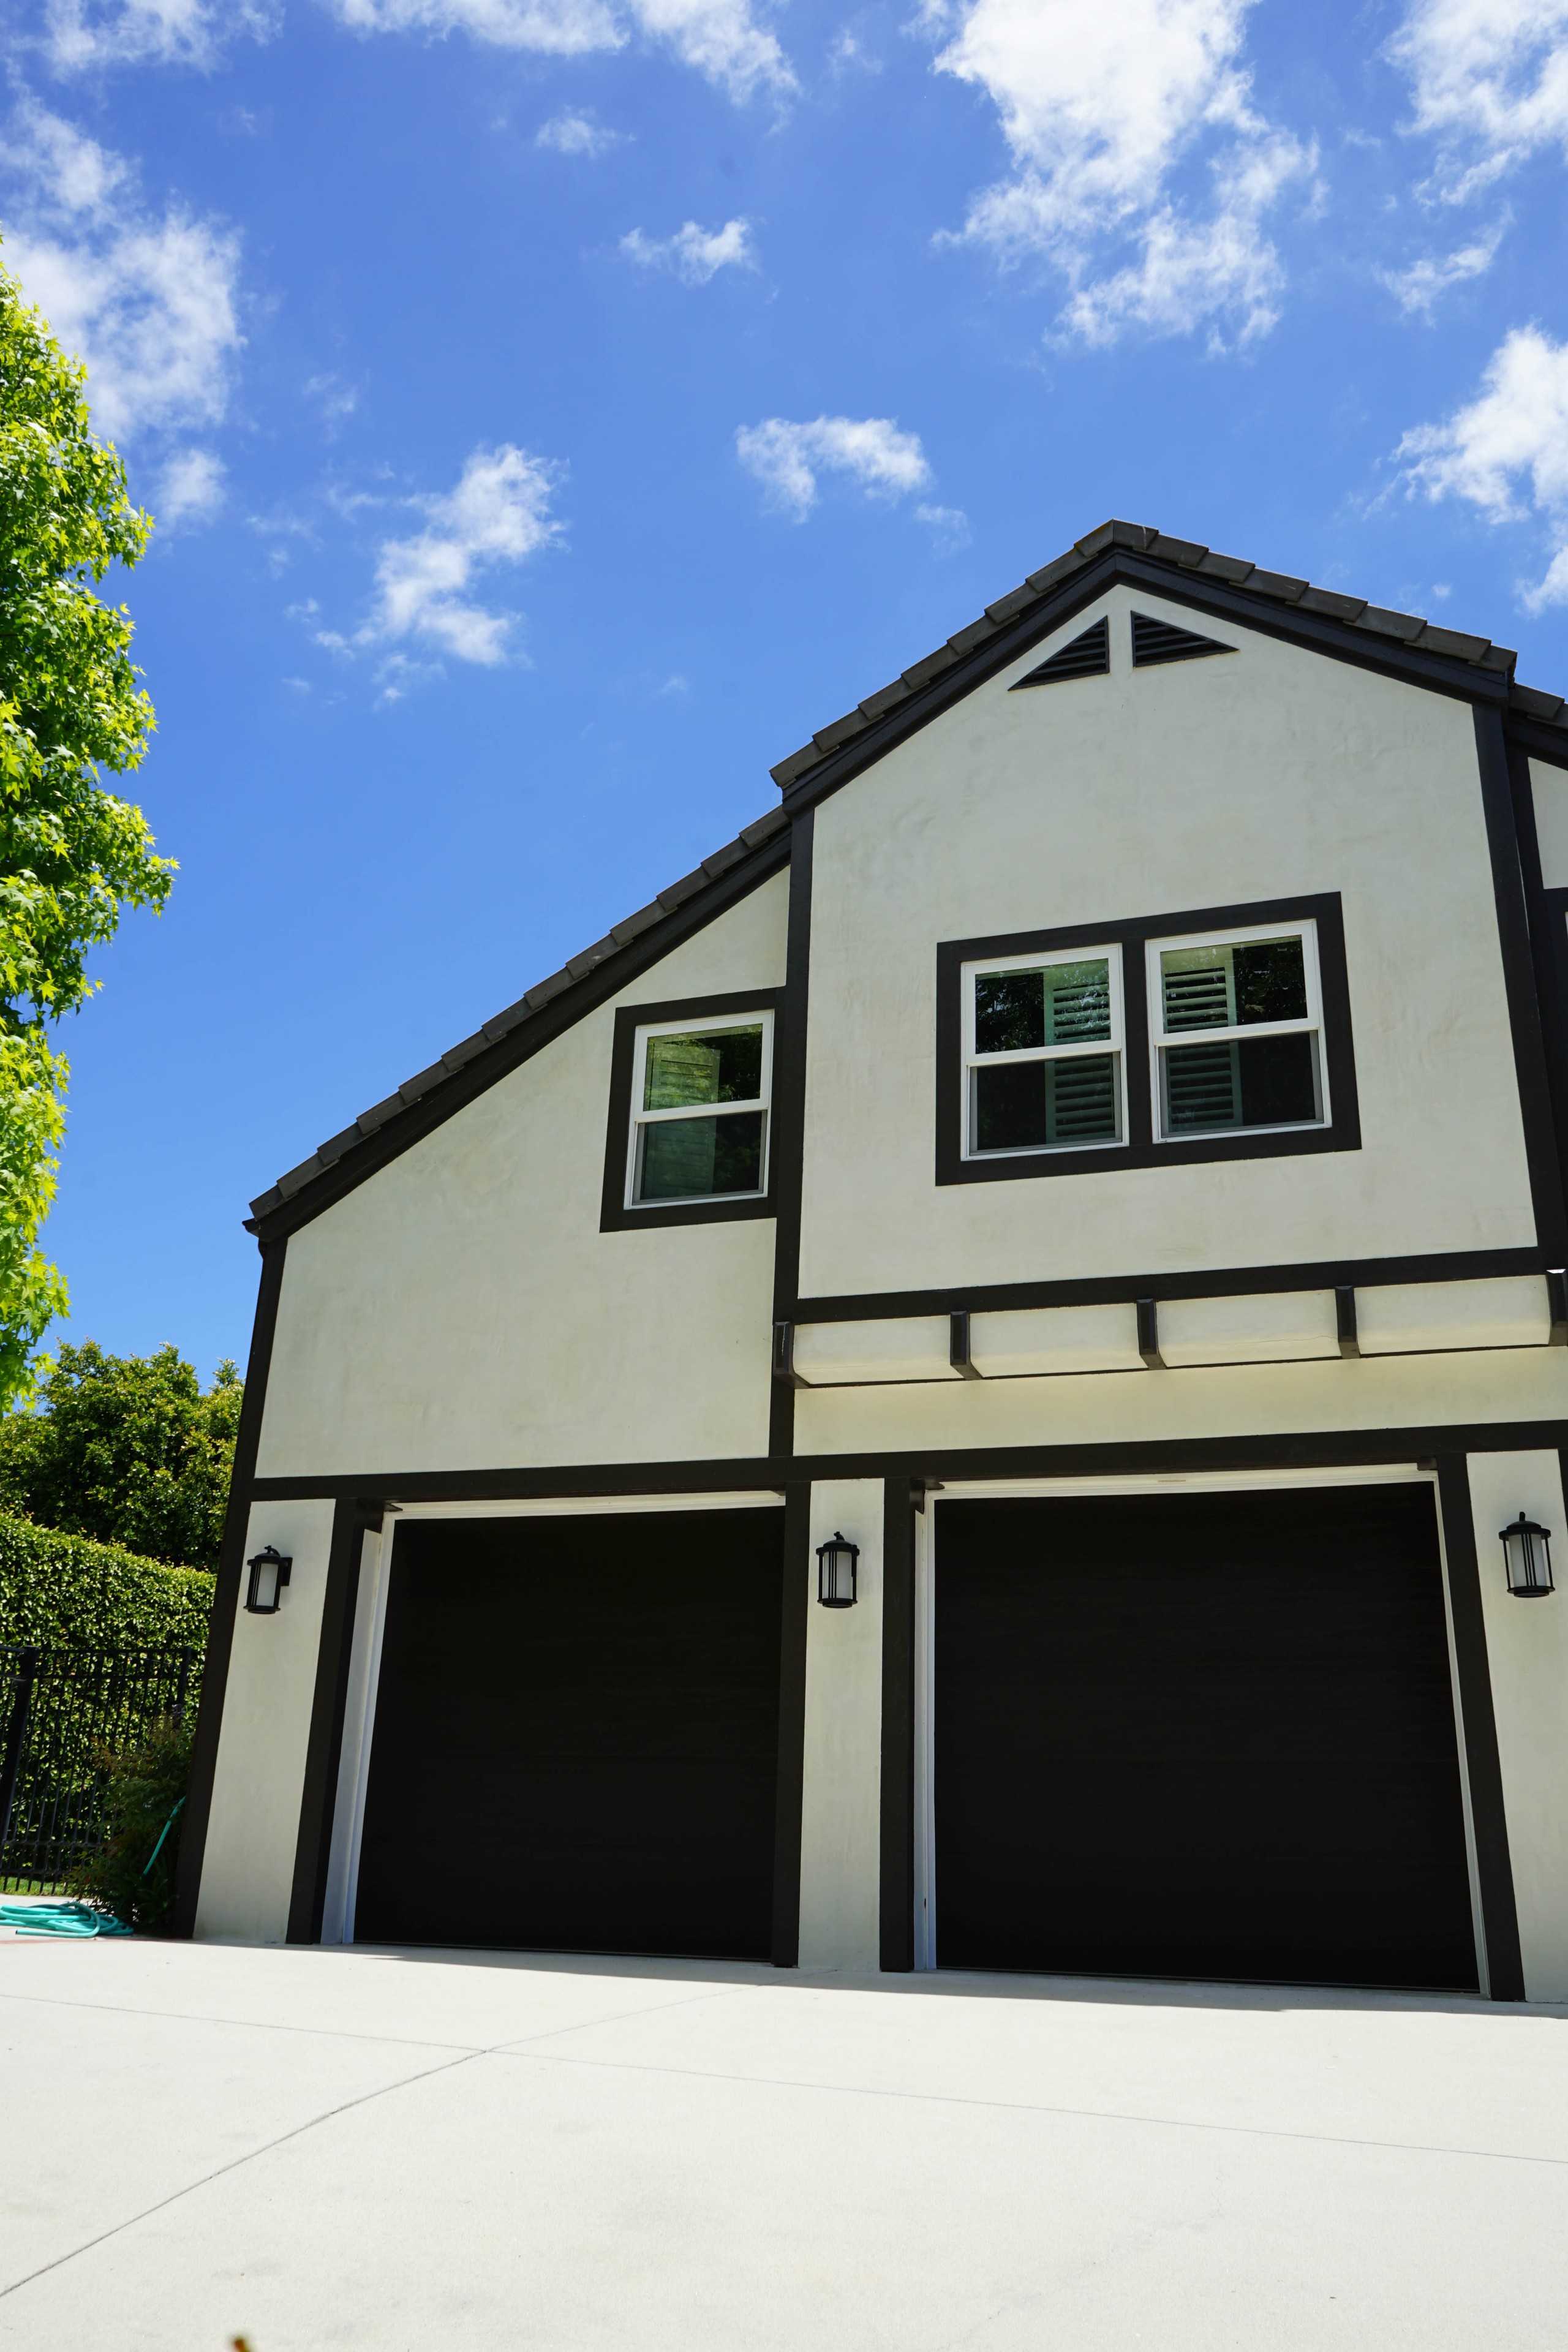 Malibu, CA / Roof, Windows, Trim, Facia, Garage Doors, Stucco Installation & Pai